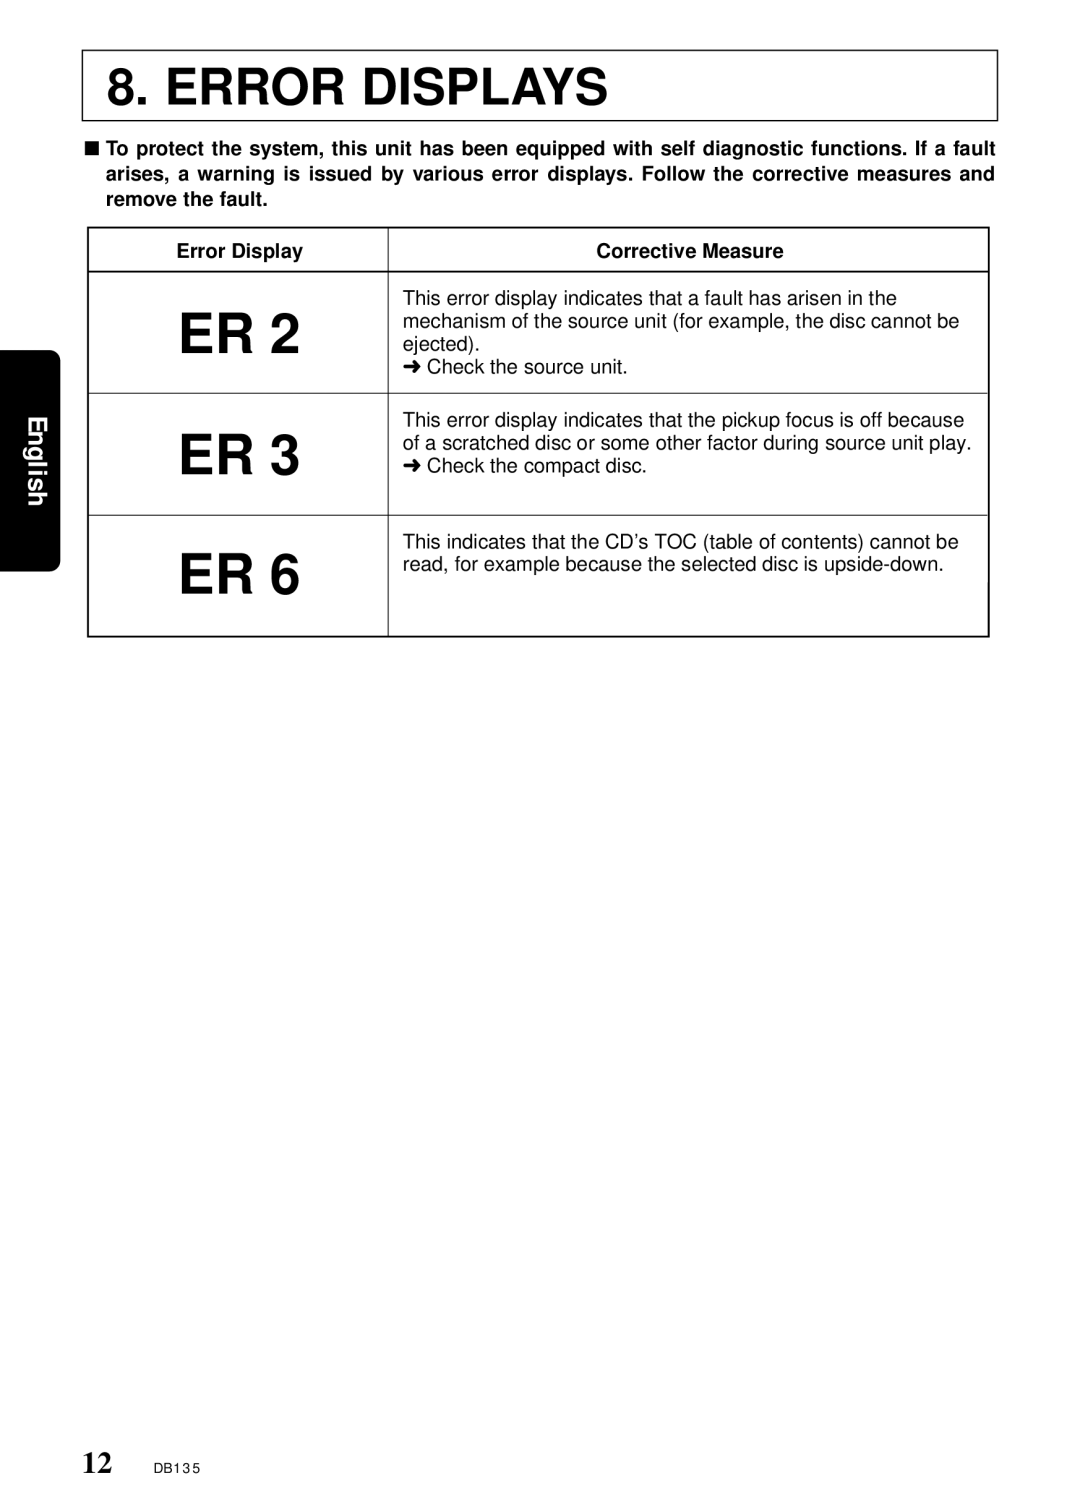 Clarion DB135 owner manual Error Displays, English 